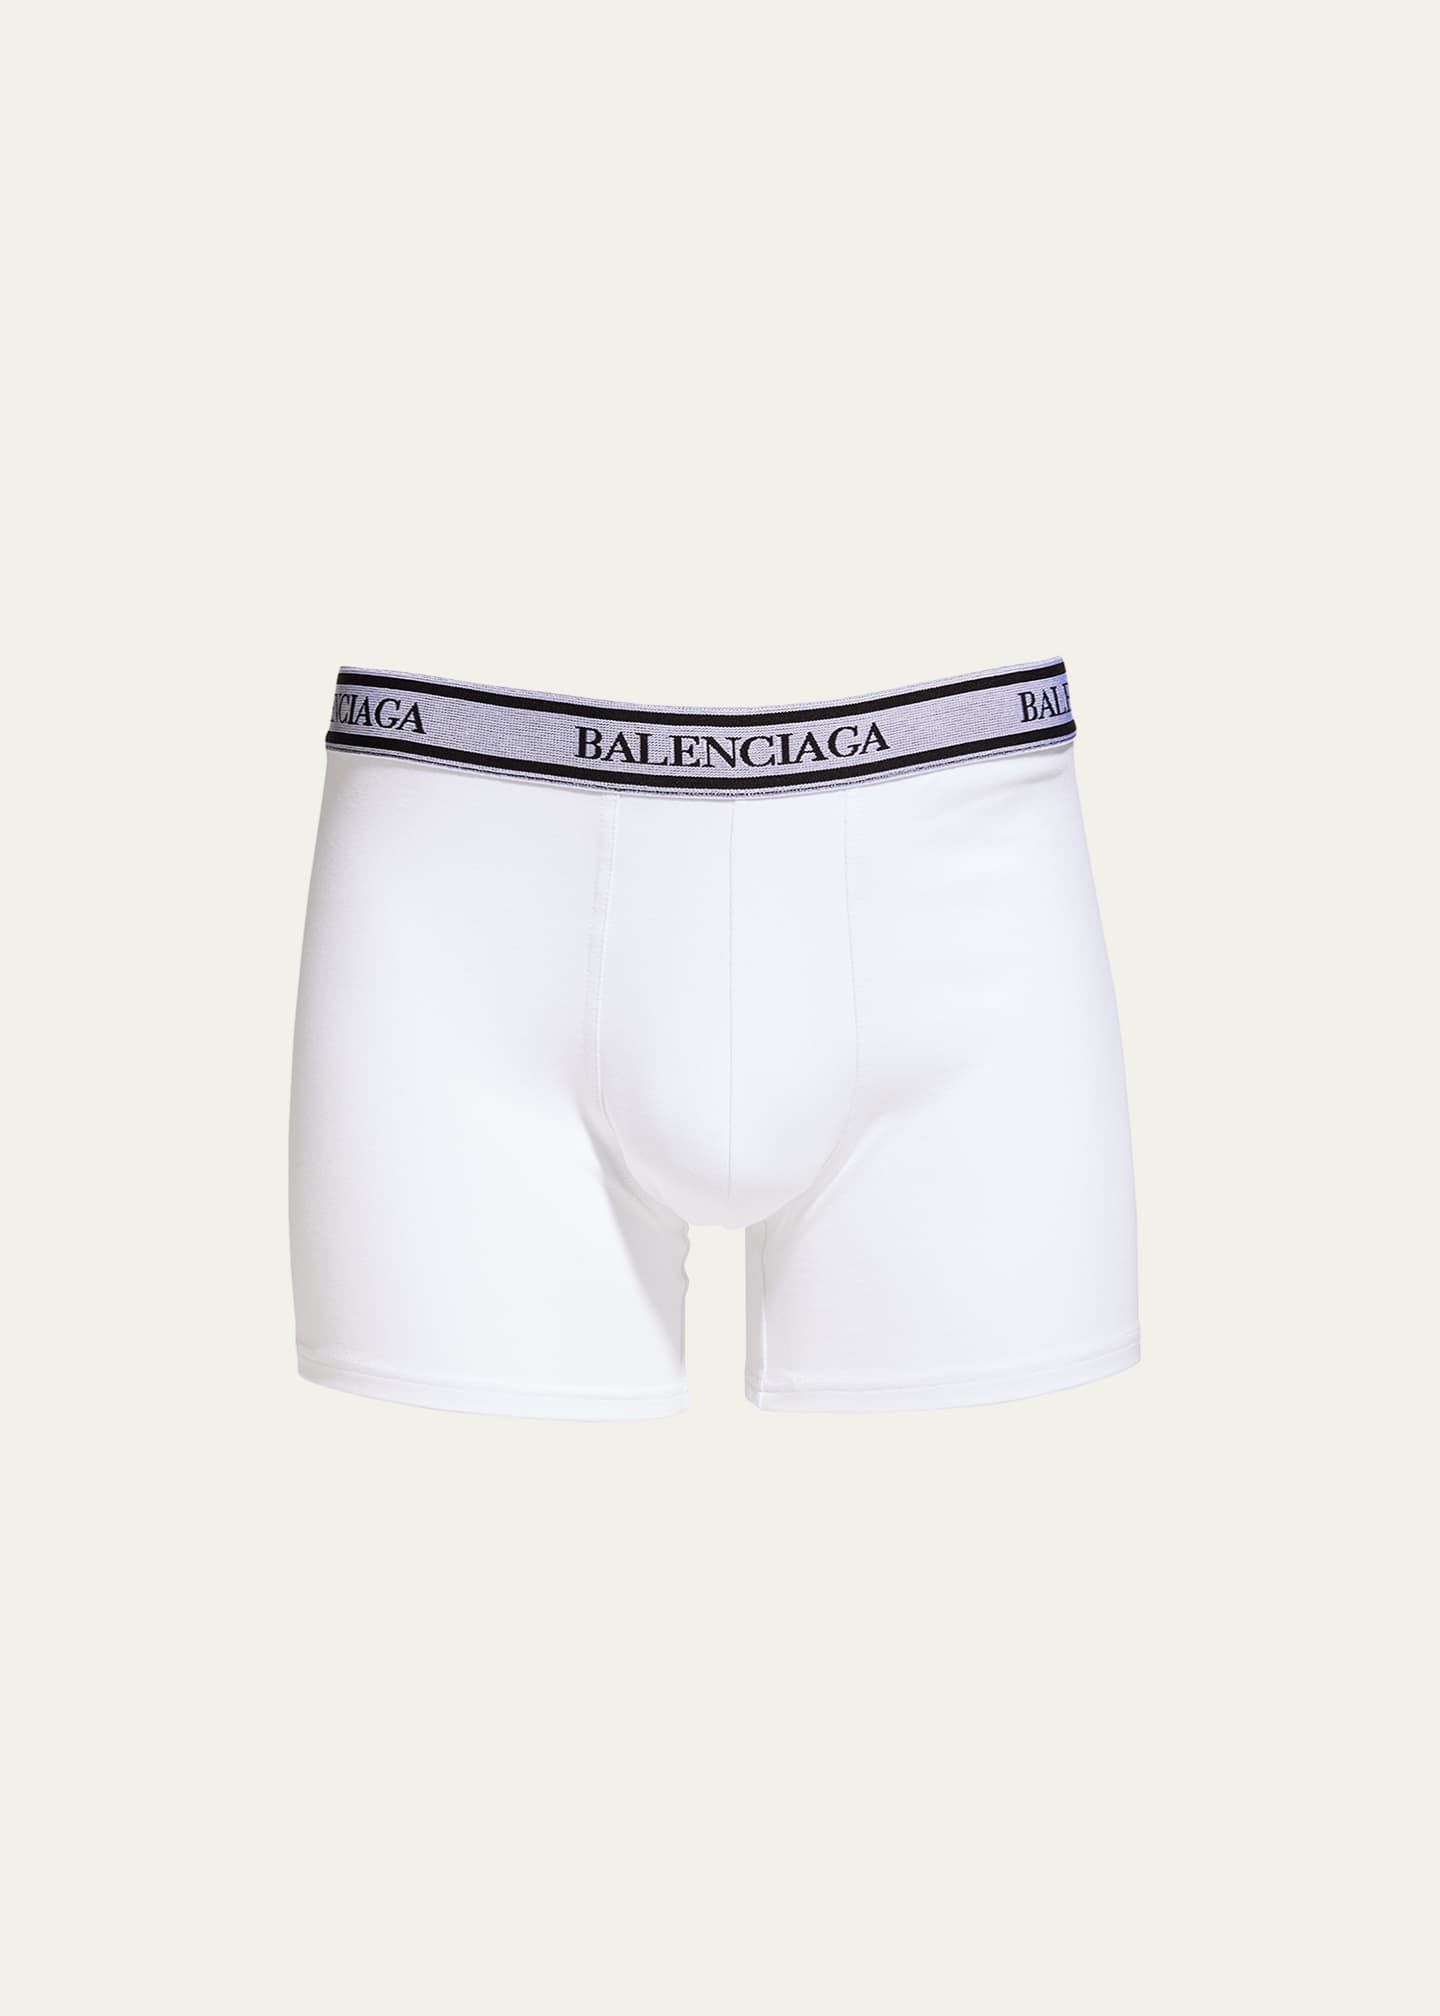 Men's Underwear at Bergdorf Goodman - Clothing